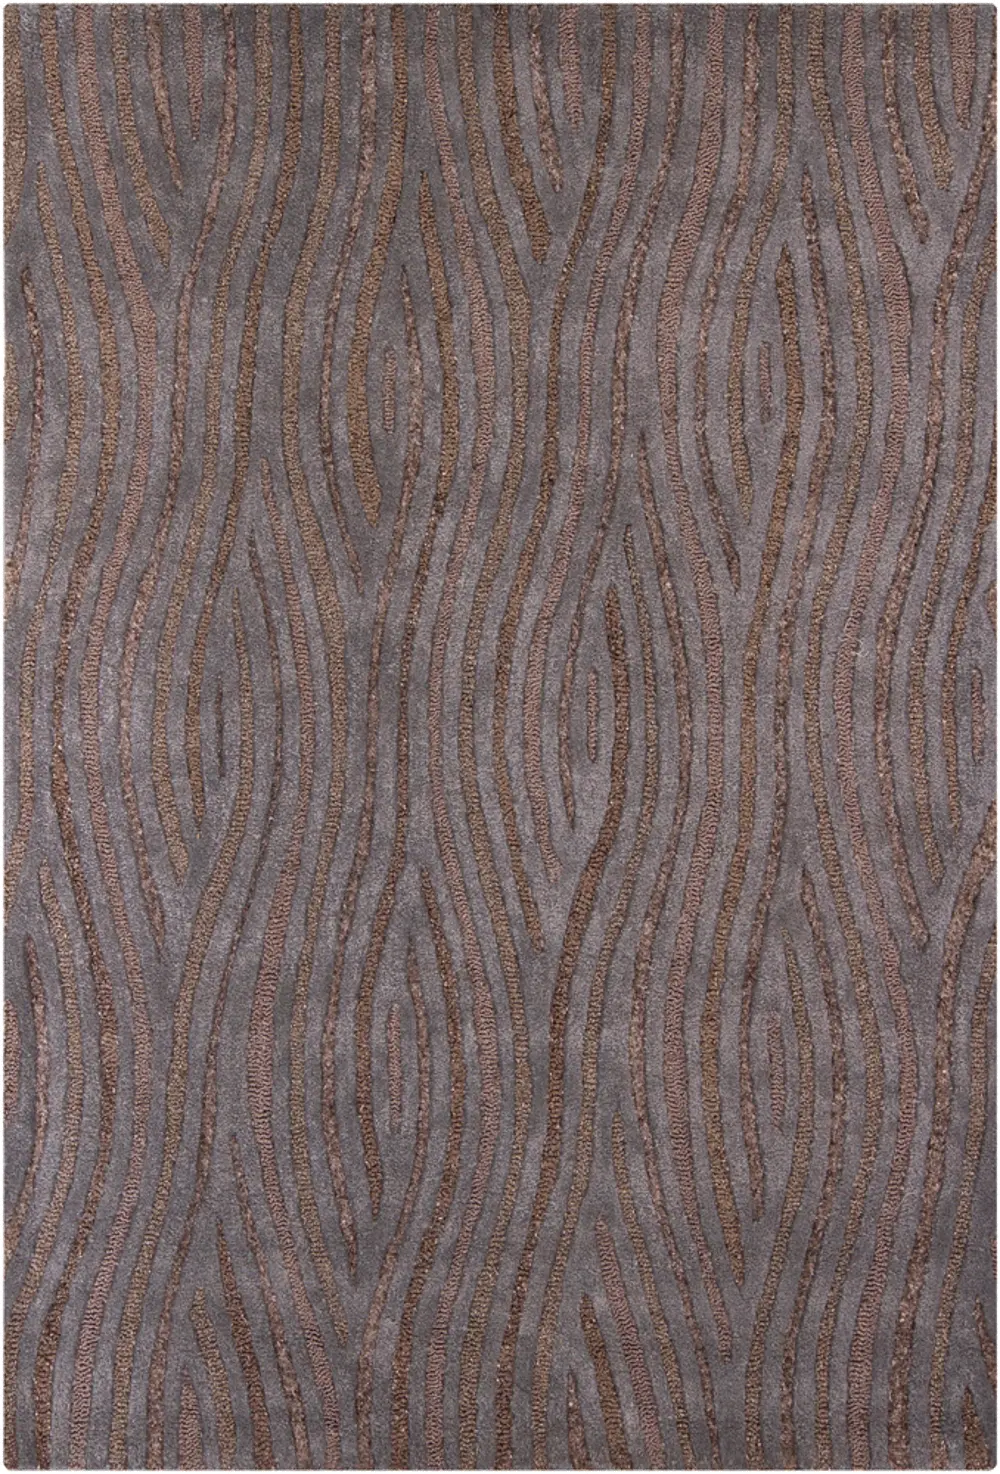 5 x 8 Medium Contemporary Brown and Gray Area Rug - Penelope-1